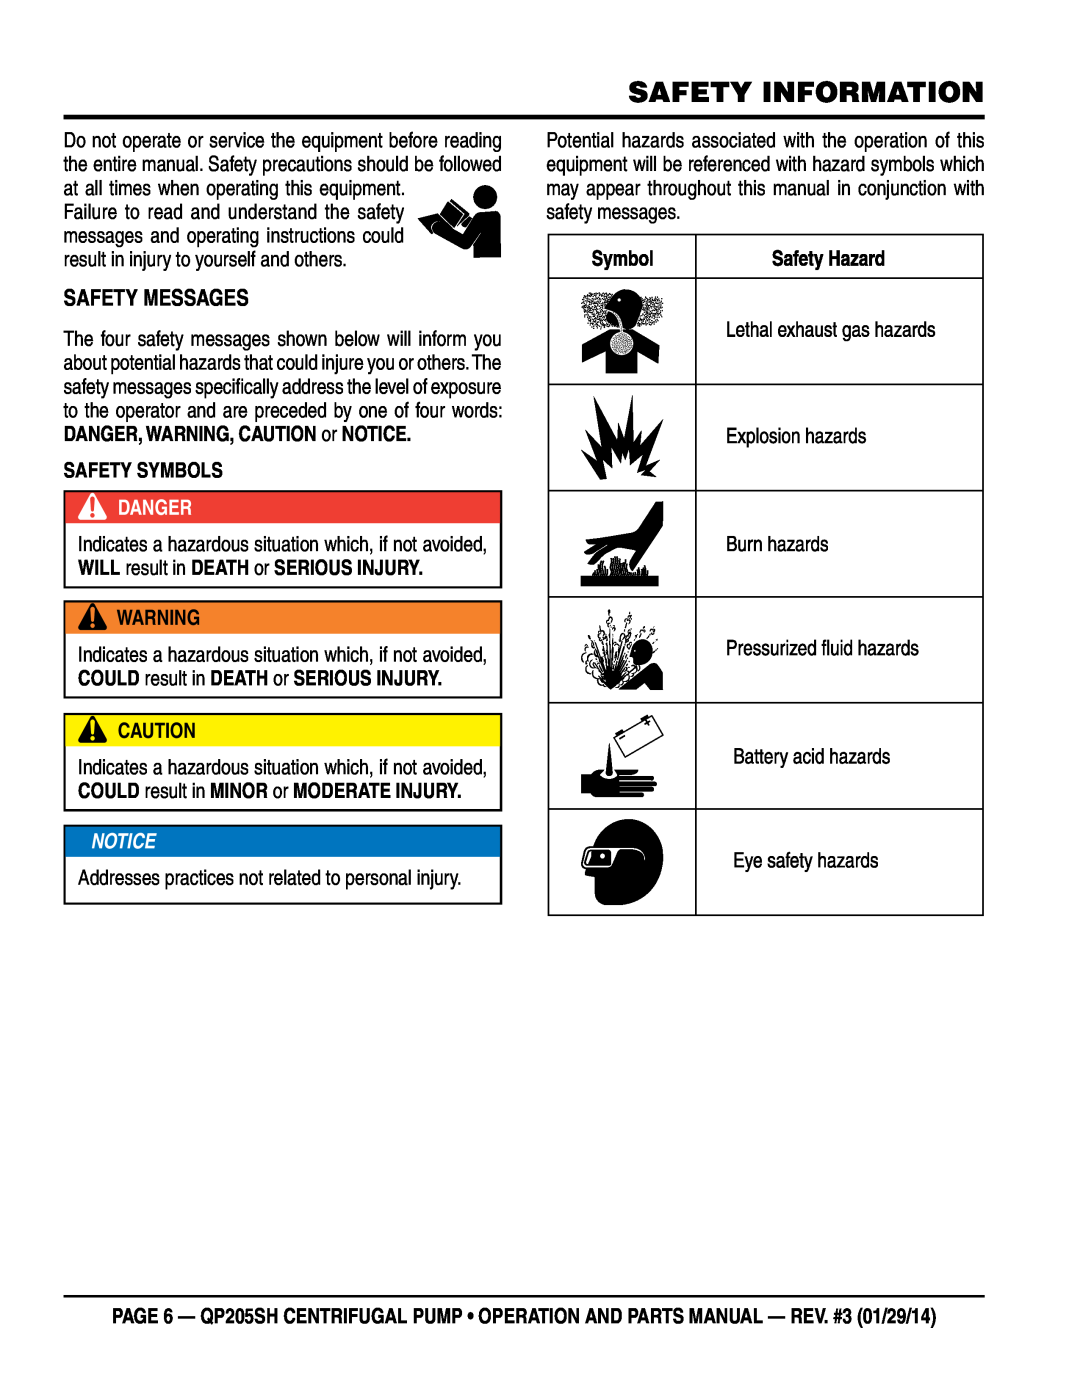 Honda Power Equipment QP205SH manual Safety Information, Safety Messages, Safety Symbols, Danger 